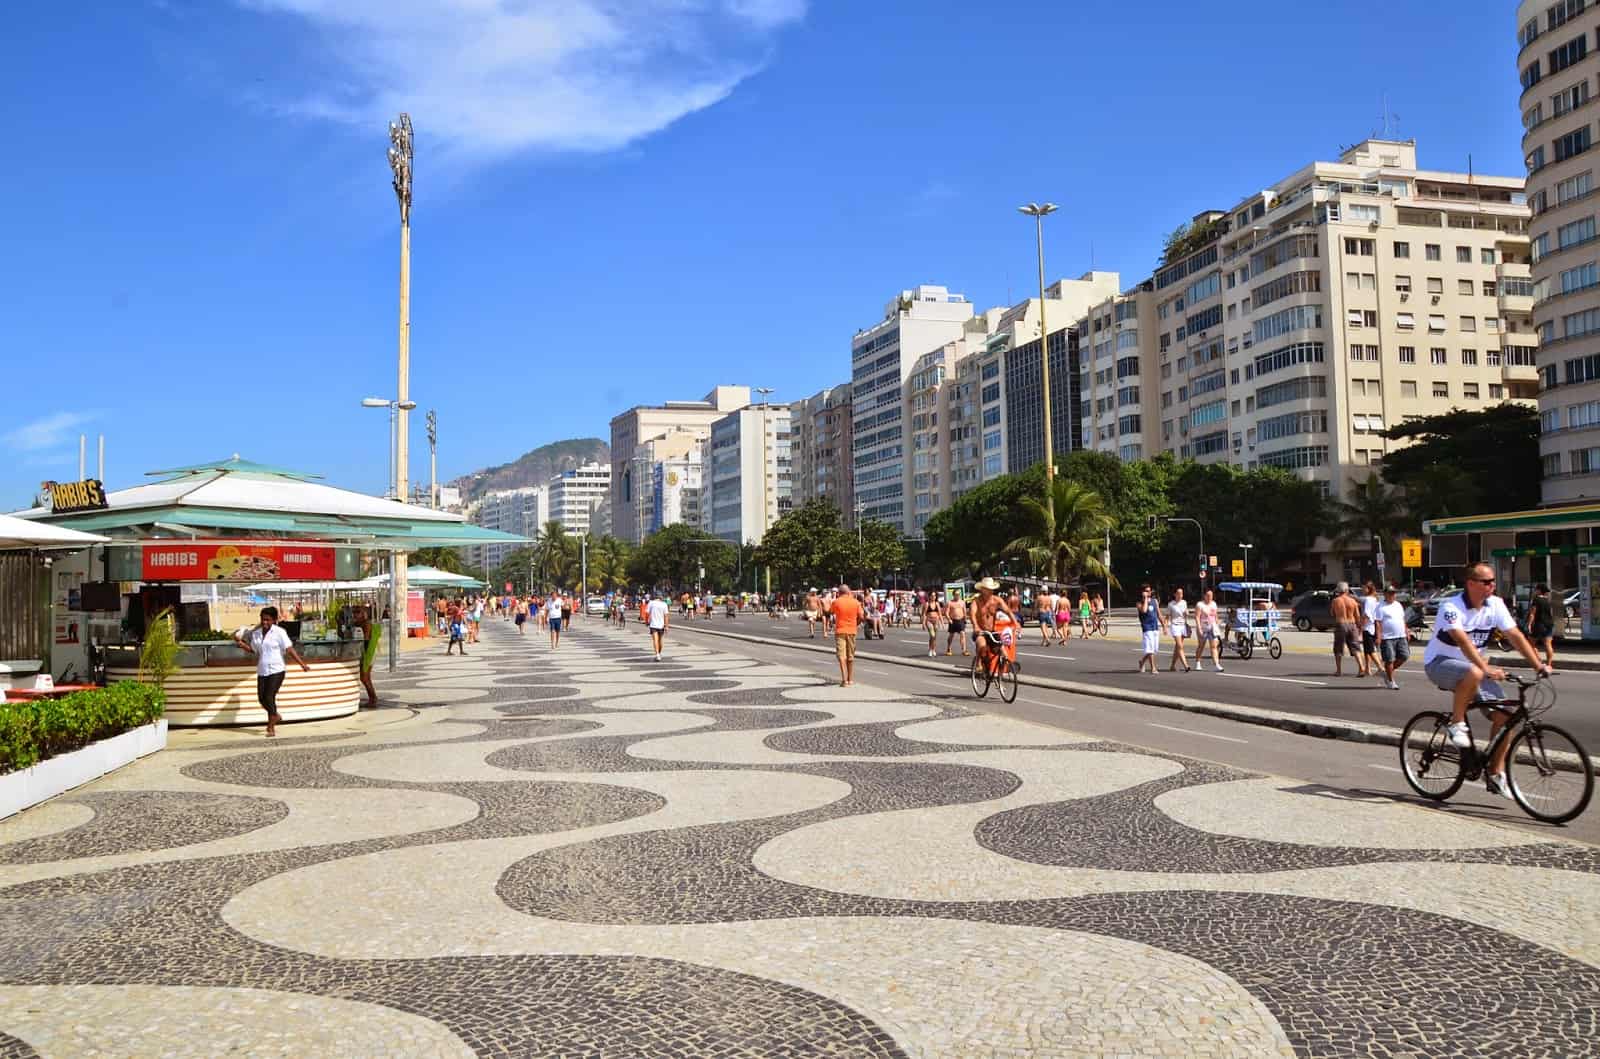 Sunday in Copacabana in Rio de Janeiro, Brazil